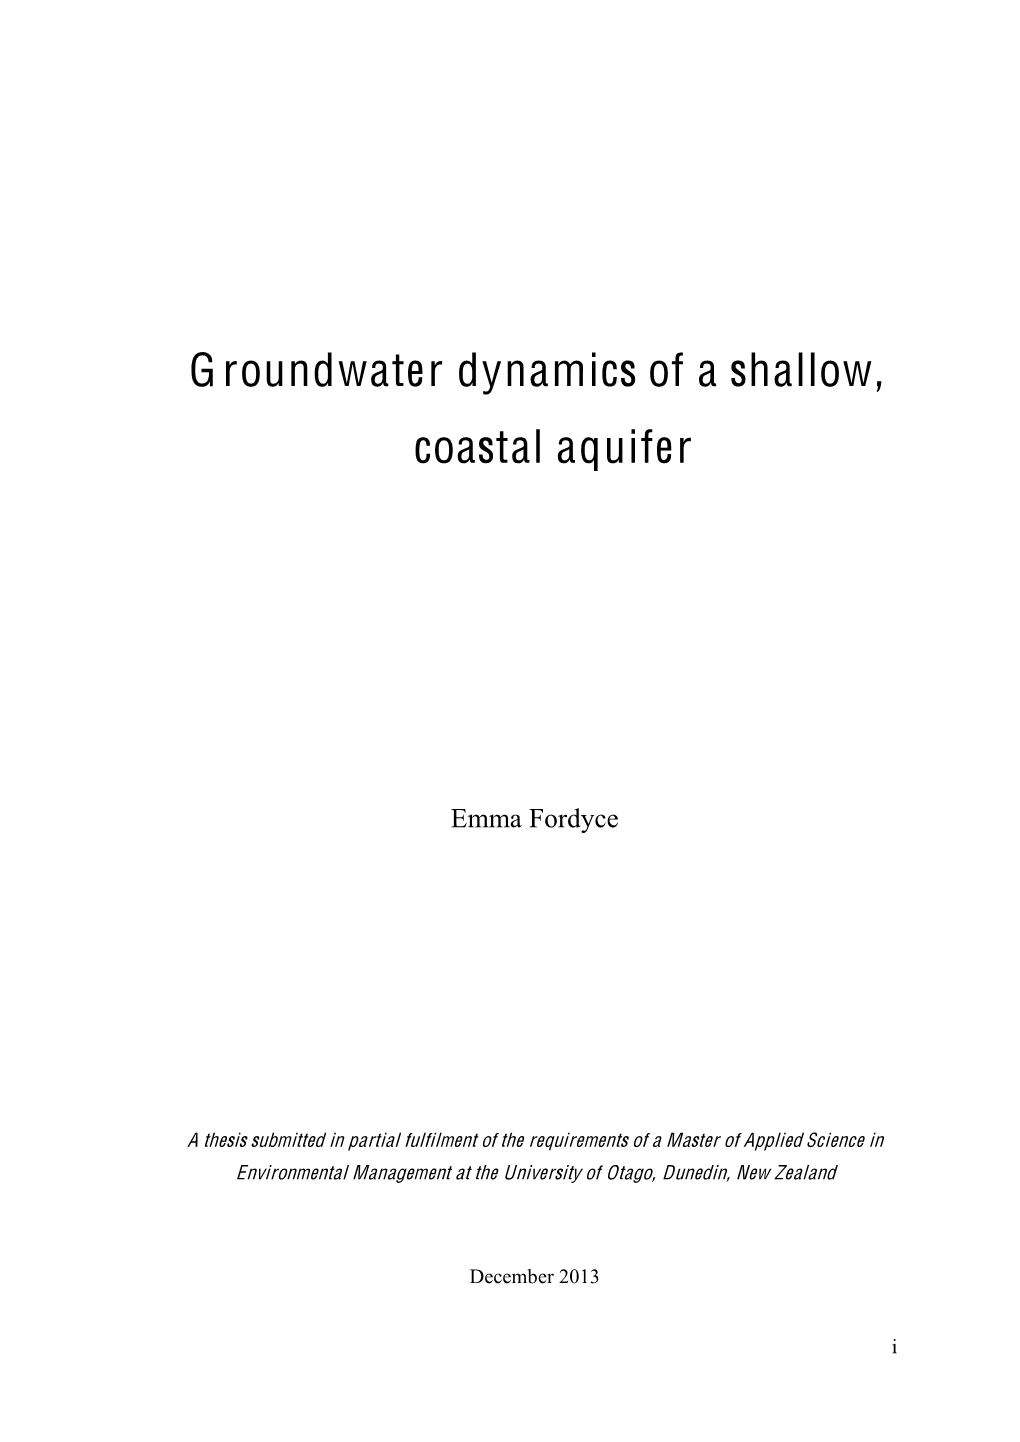 Groundwater Dynamics of a Shallow, Coastal Aquifer